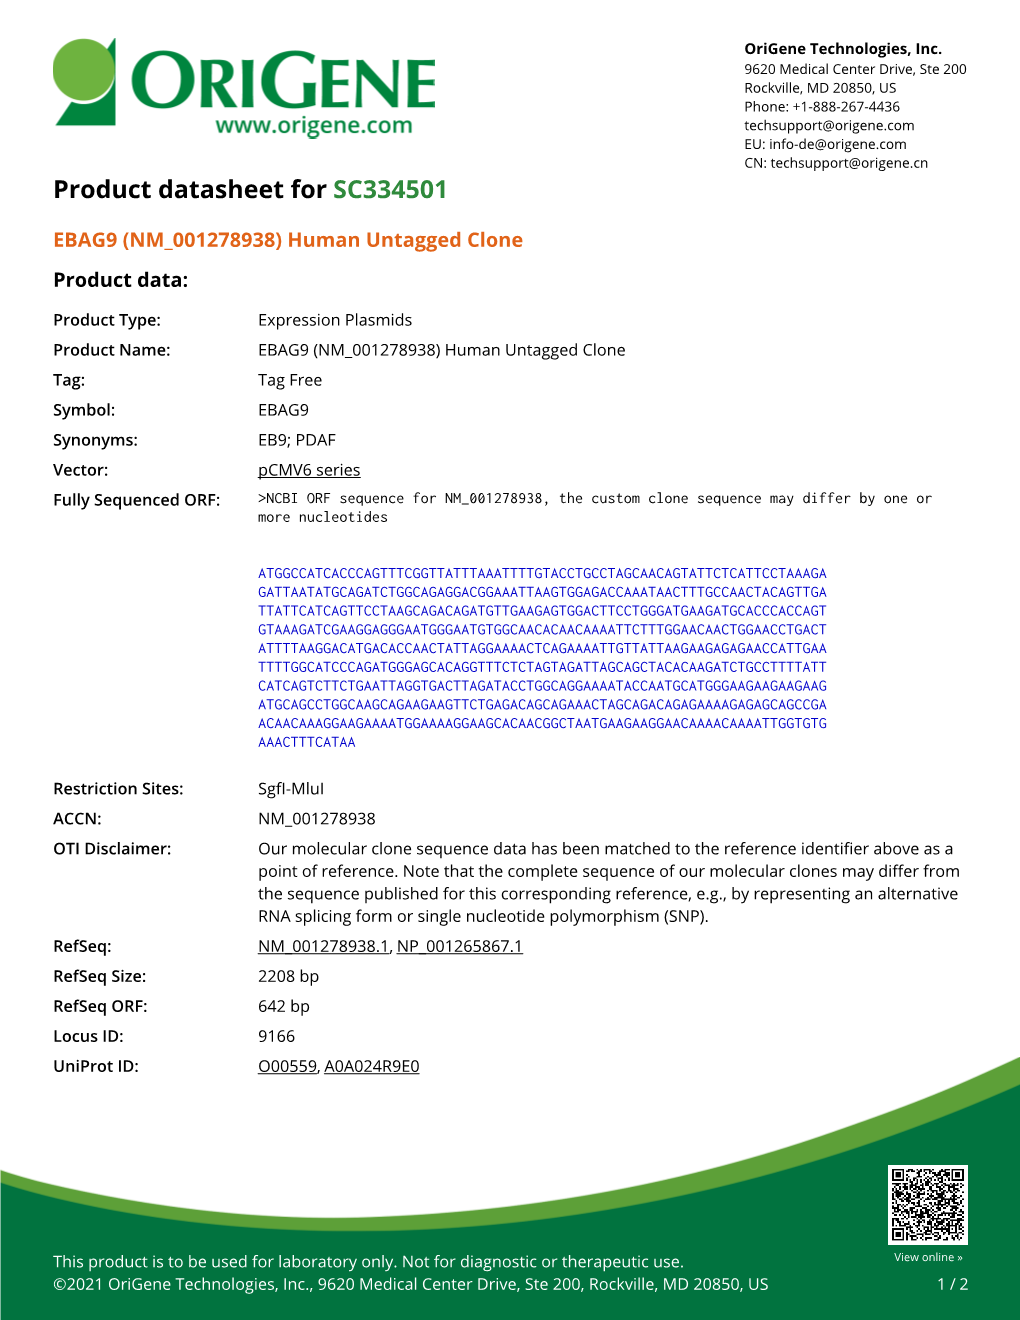 EBAG9 (NM 001278938) Human Untagged Clone Product Data